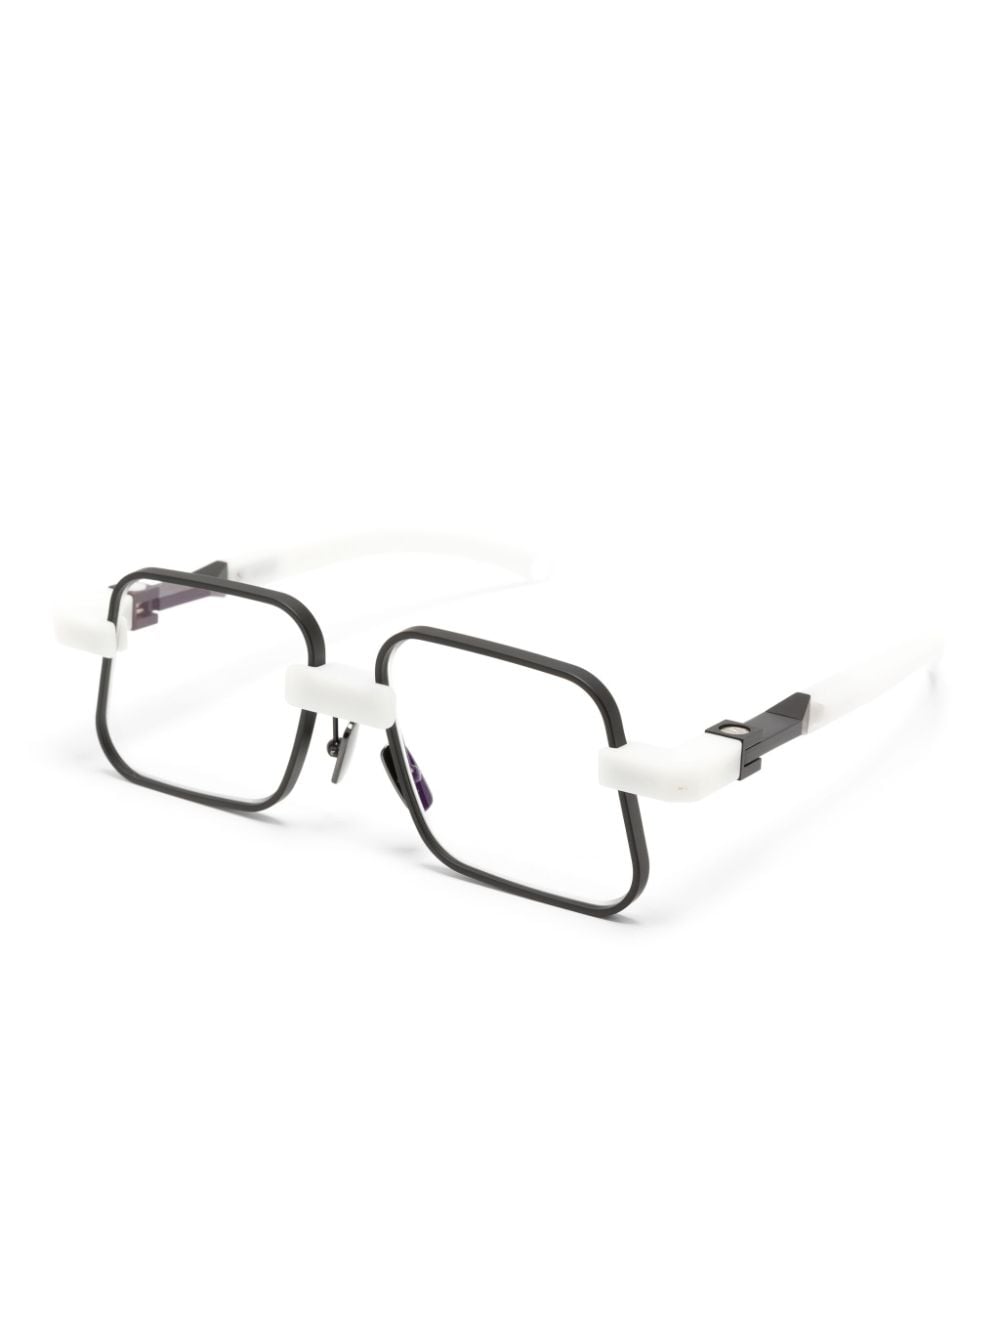 VAVA Eyewear x Suzanne Ciani bril met vierkant montuur - Wit